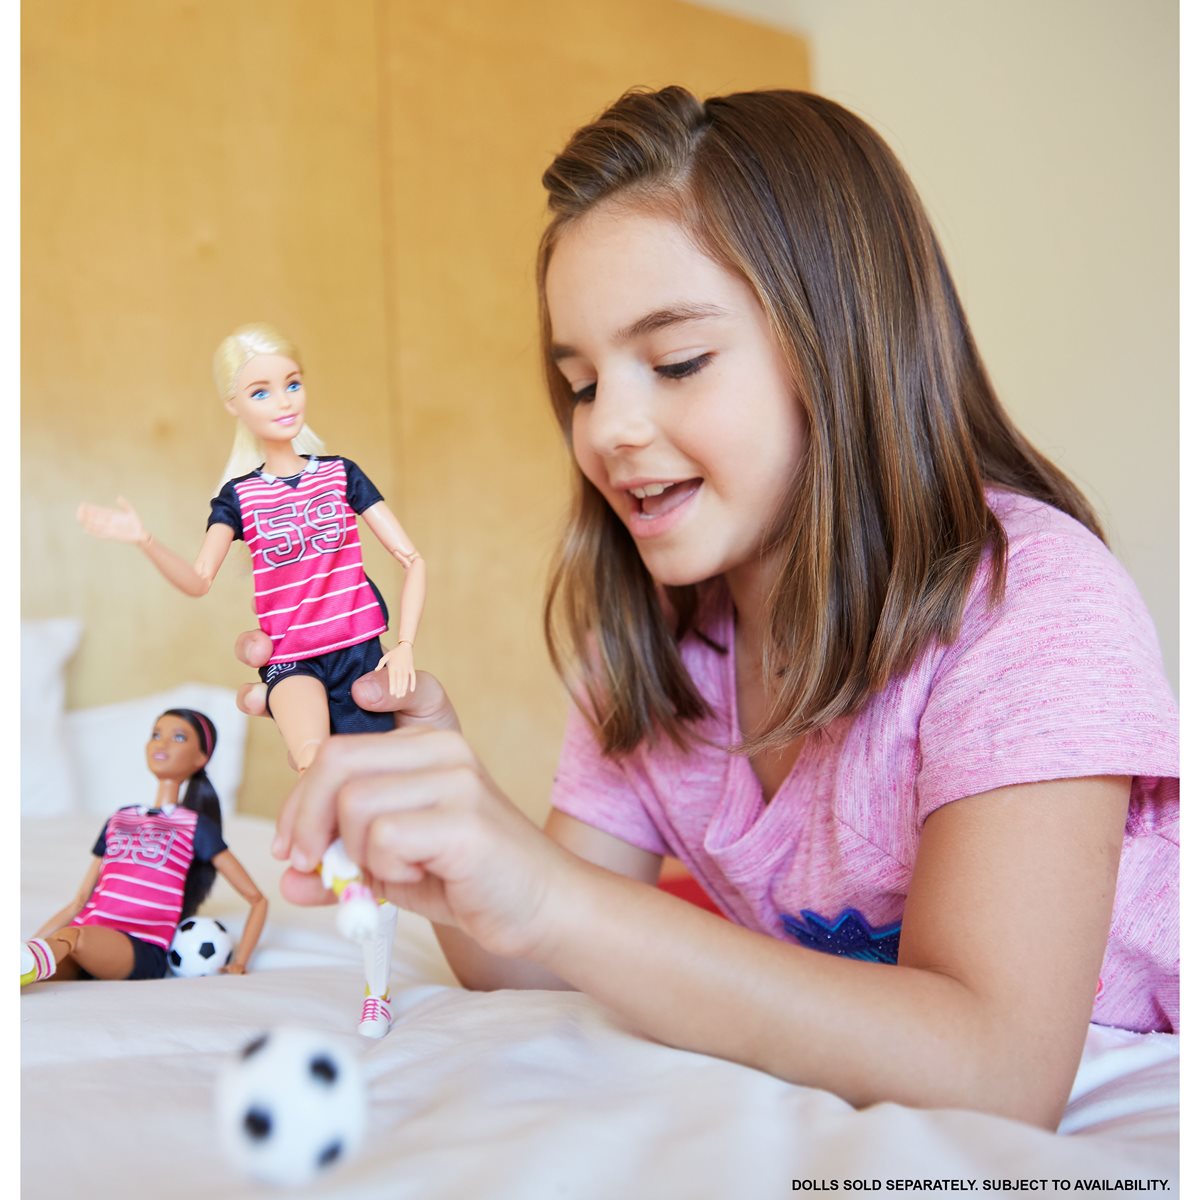 Details about   1 Mattel 2009 MadeToMove Soccer Player Articulated Blonde Barbie Doll Pick/Randm 